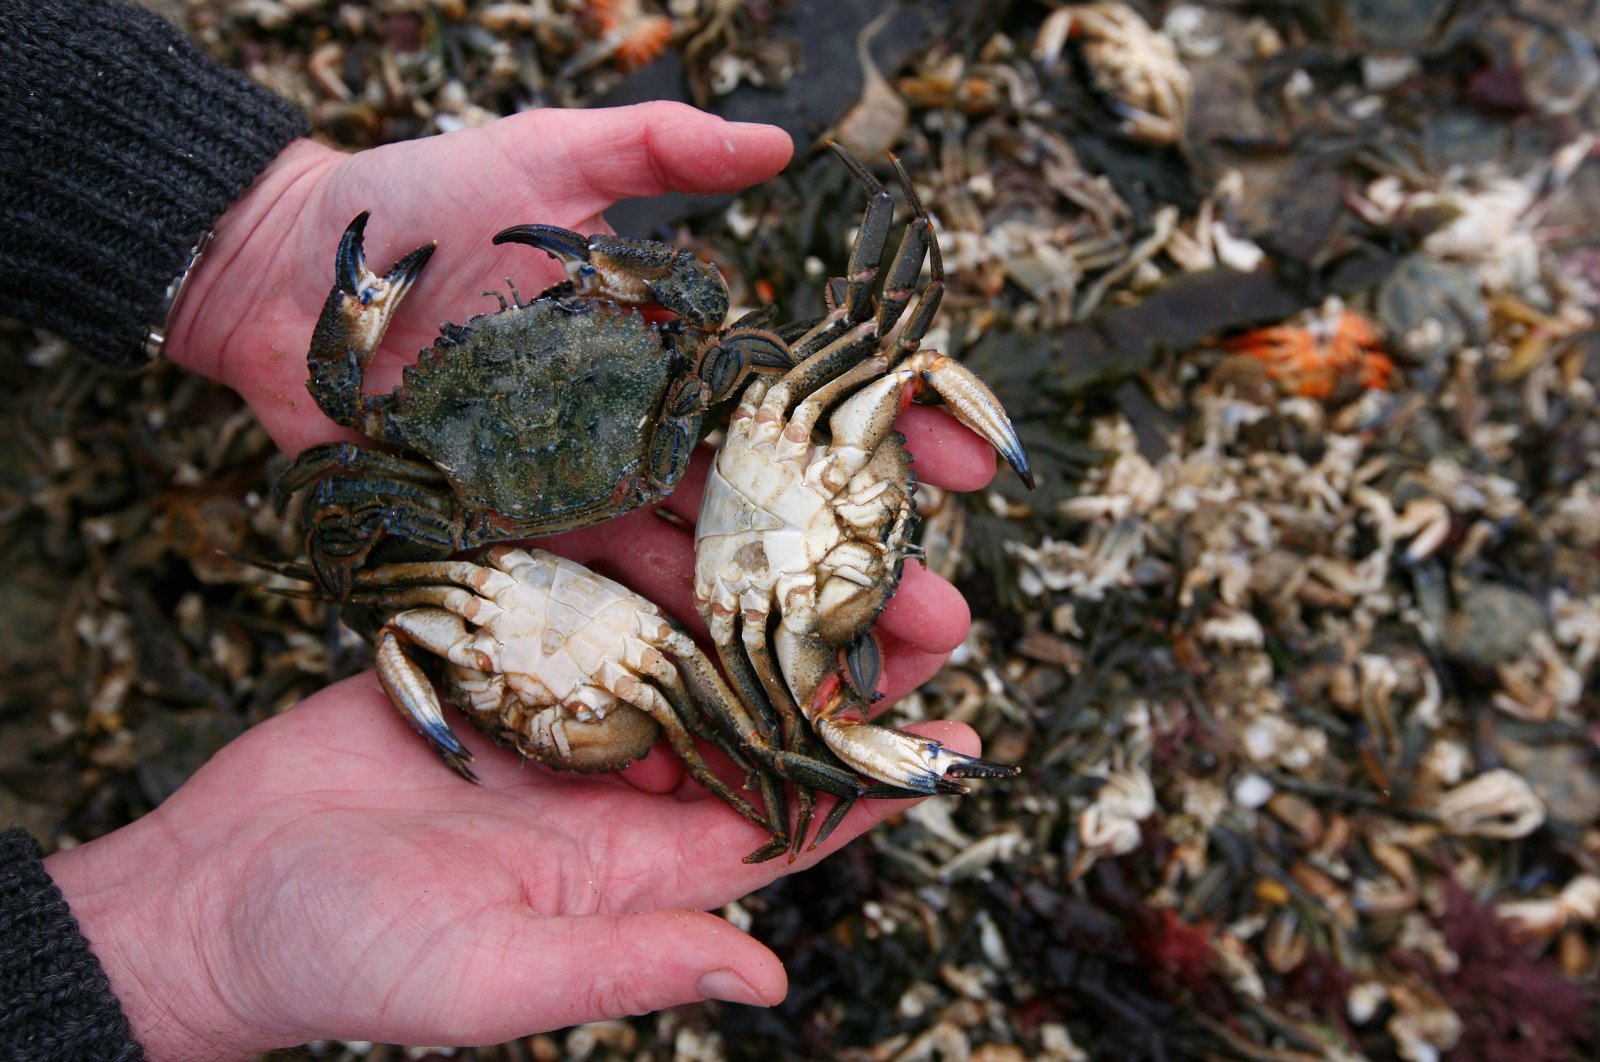 Kematian kepiting massal yang misterius di Inggris membuat para ahli bingung